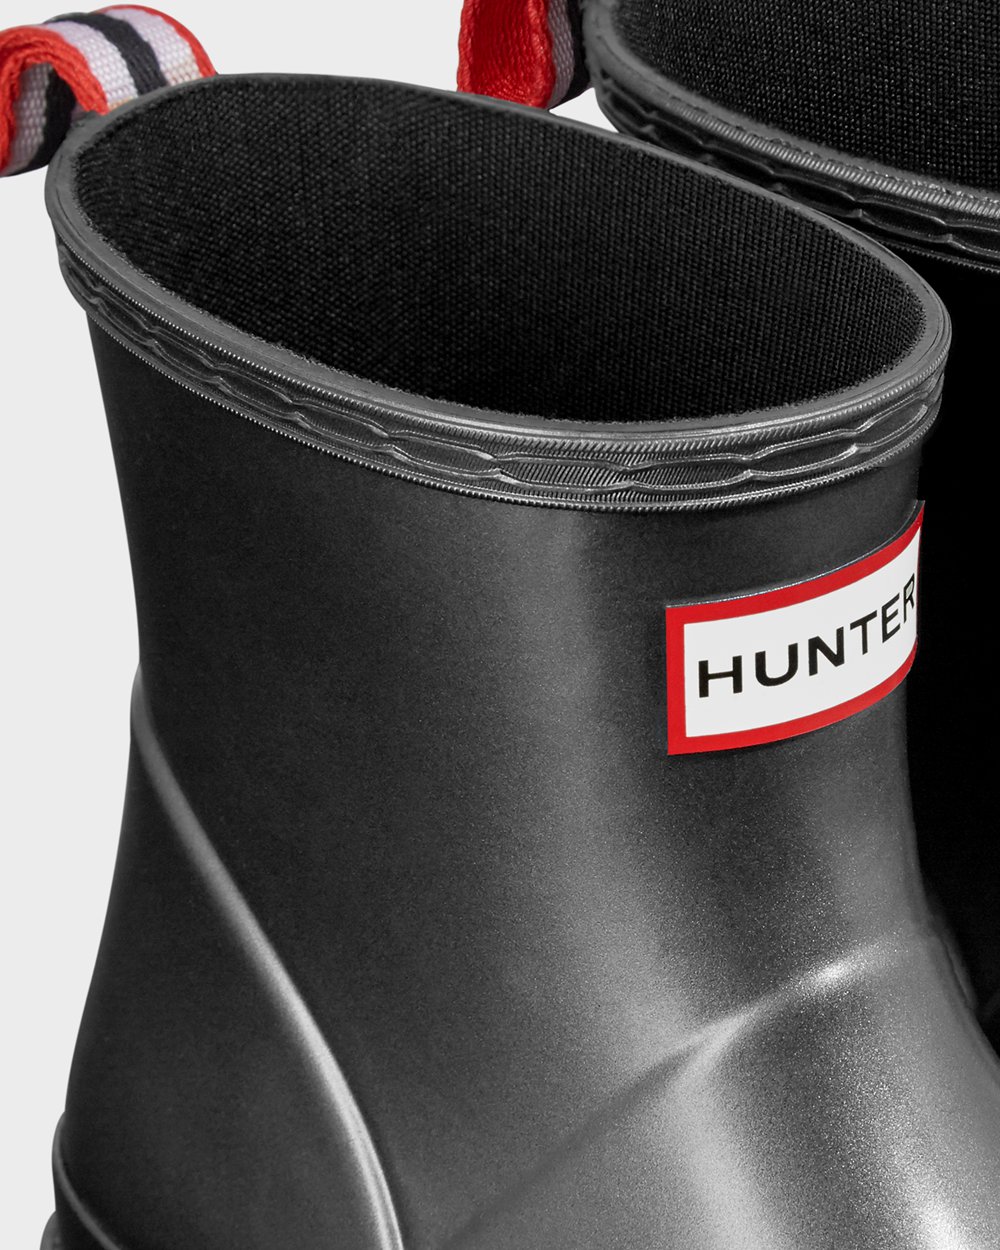 Womens Play Boots - Hunter Original Short Pearlized Rain (53UACLWRX) - Black